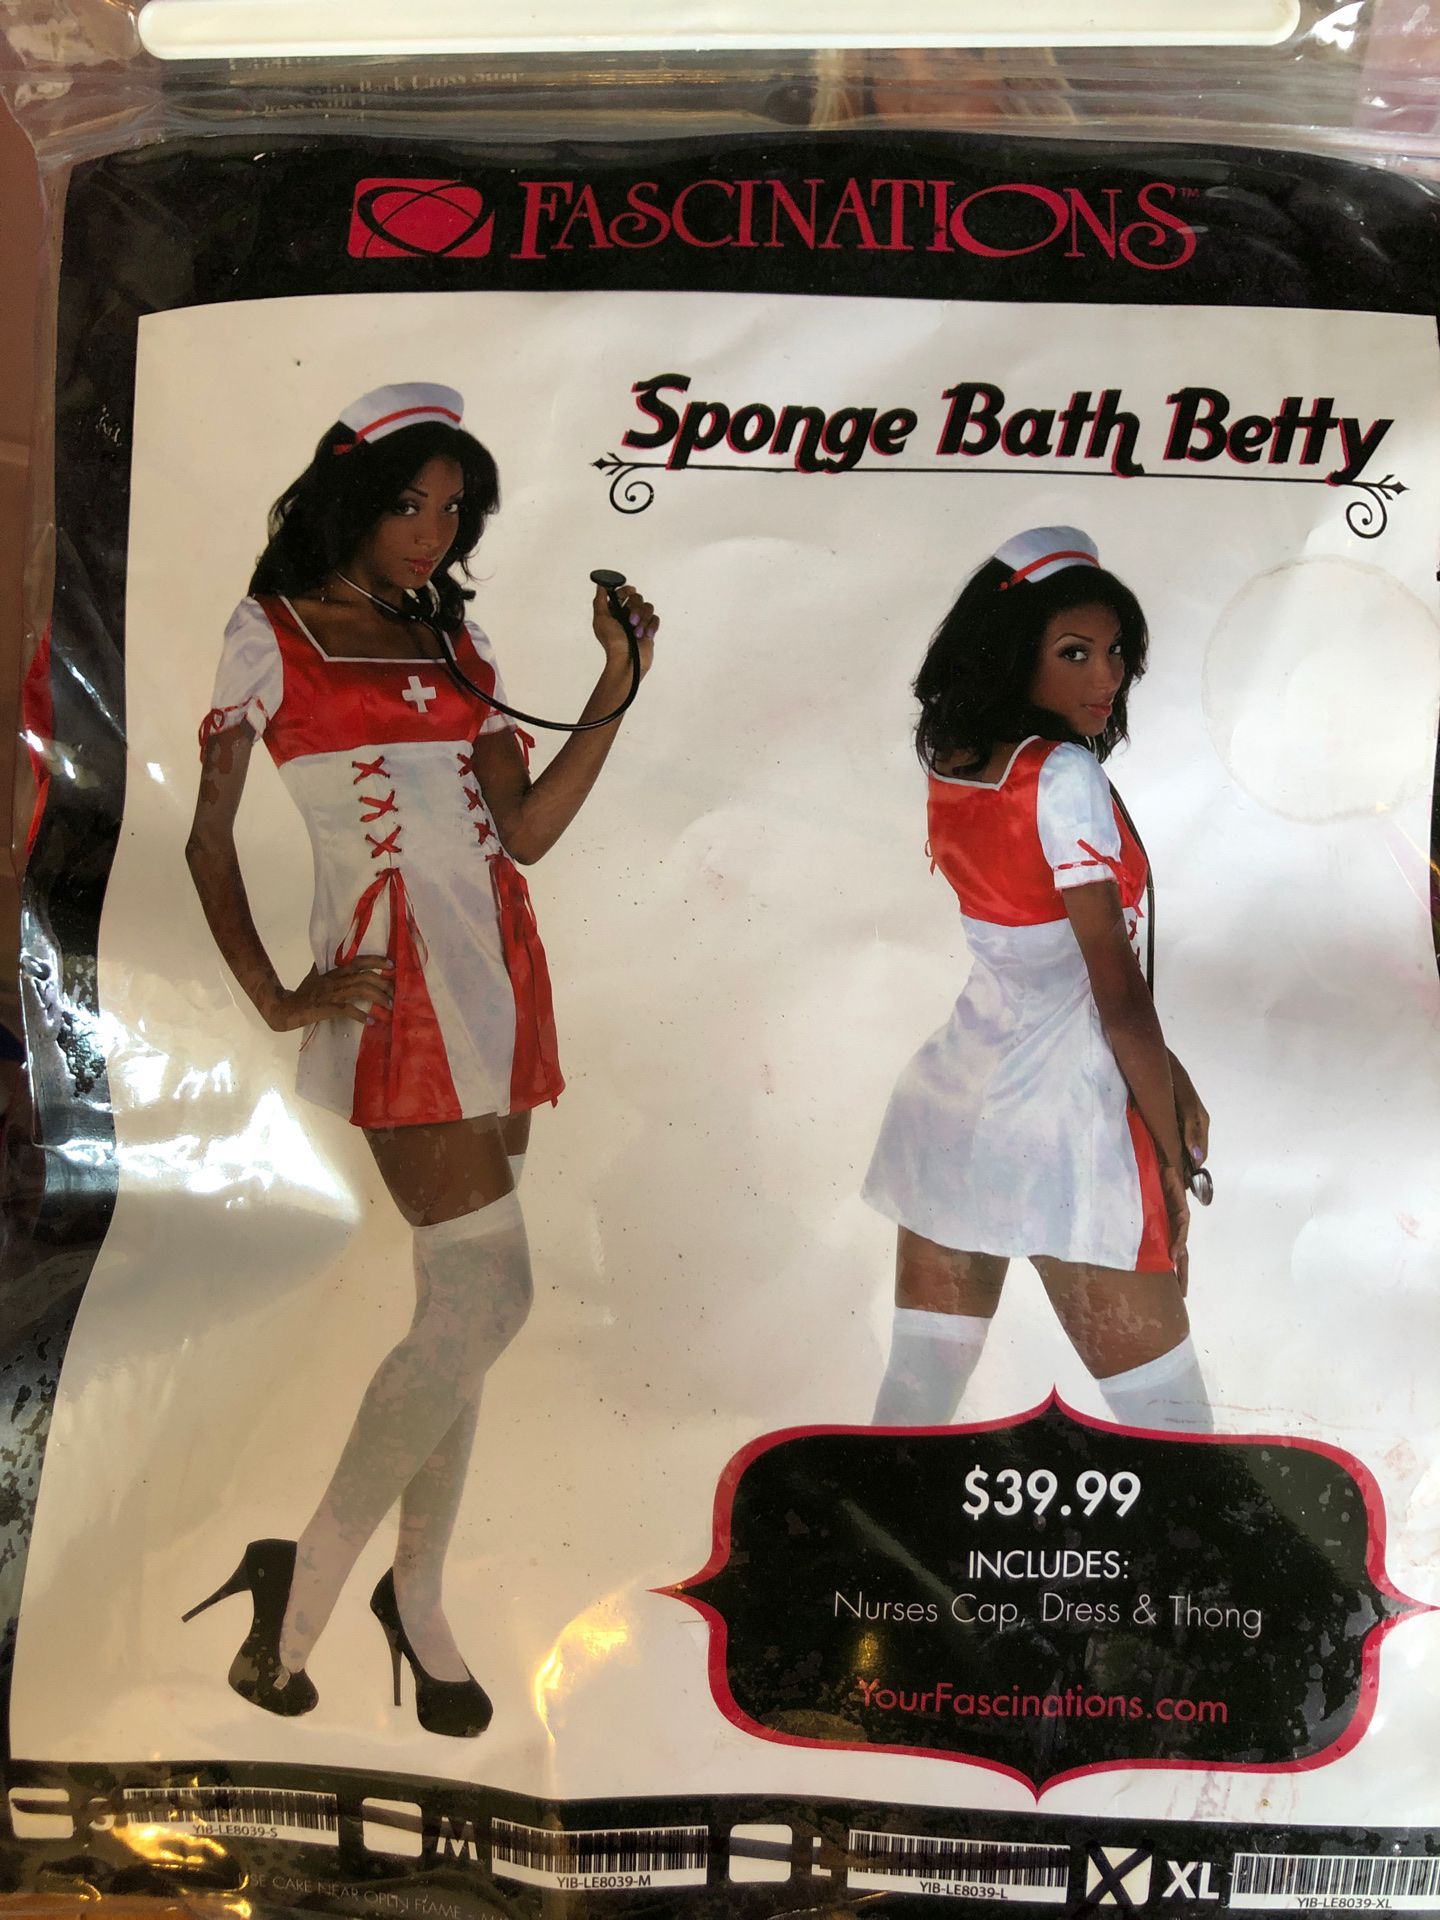 Sponge bath Betty costume size XL